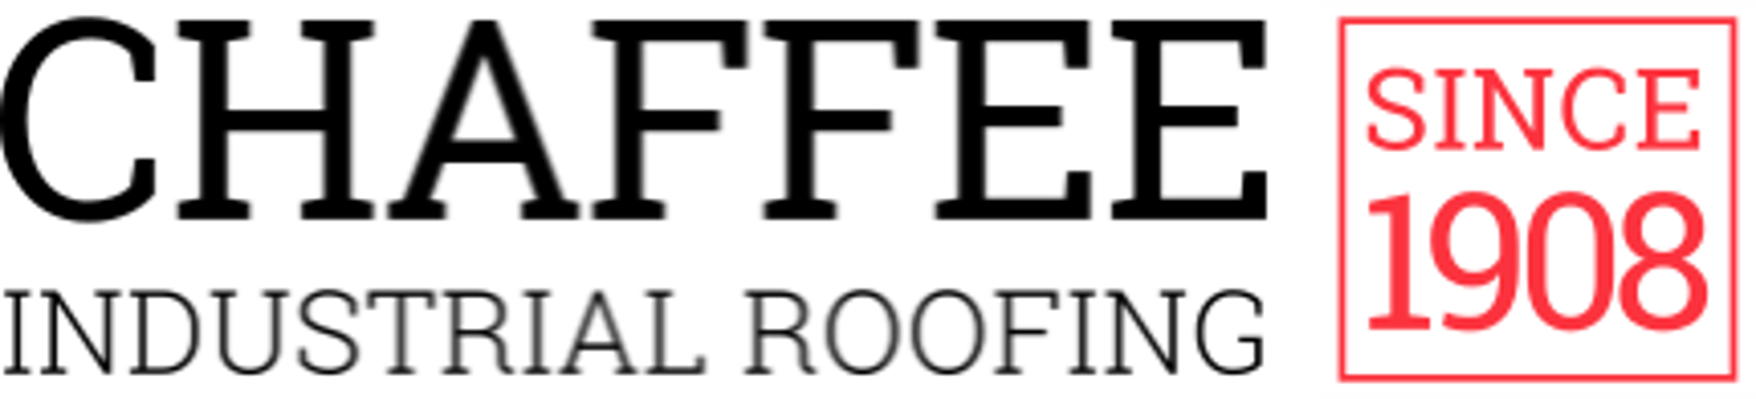 Estes Media Case Study Chaffee Roofing Logo